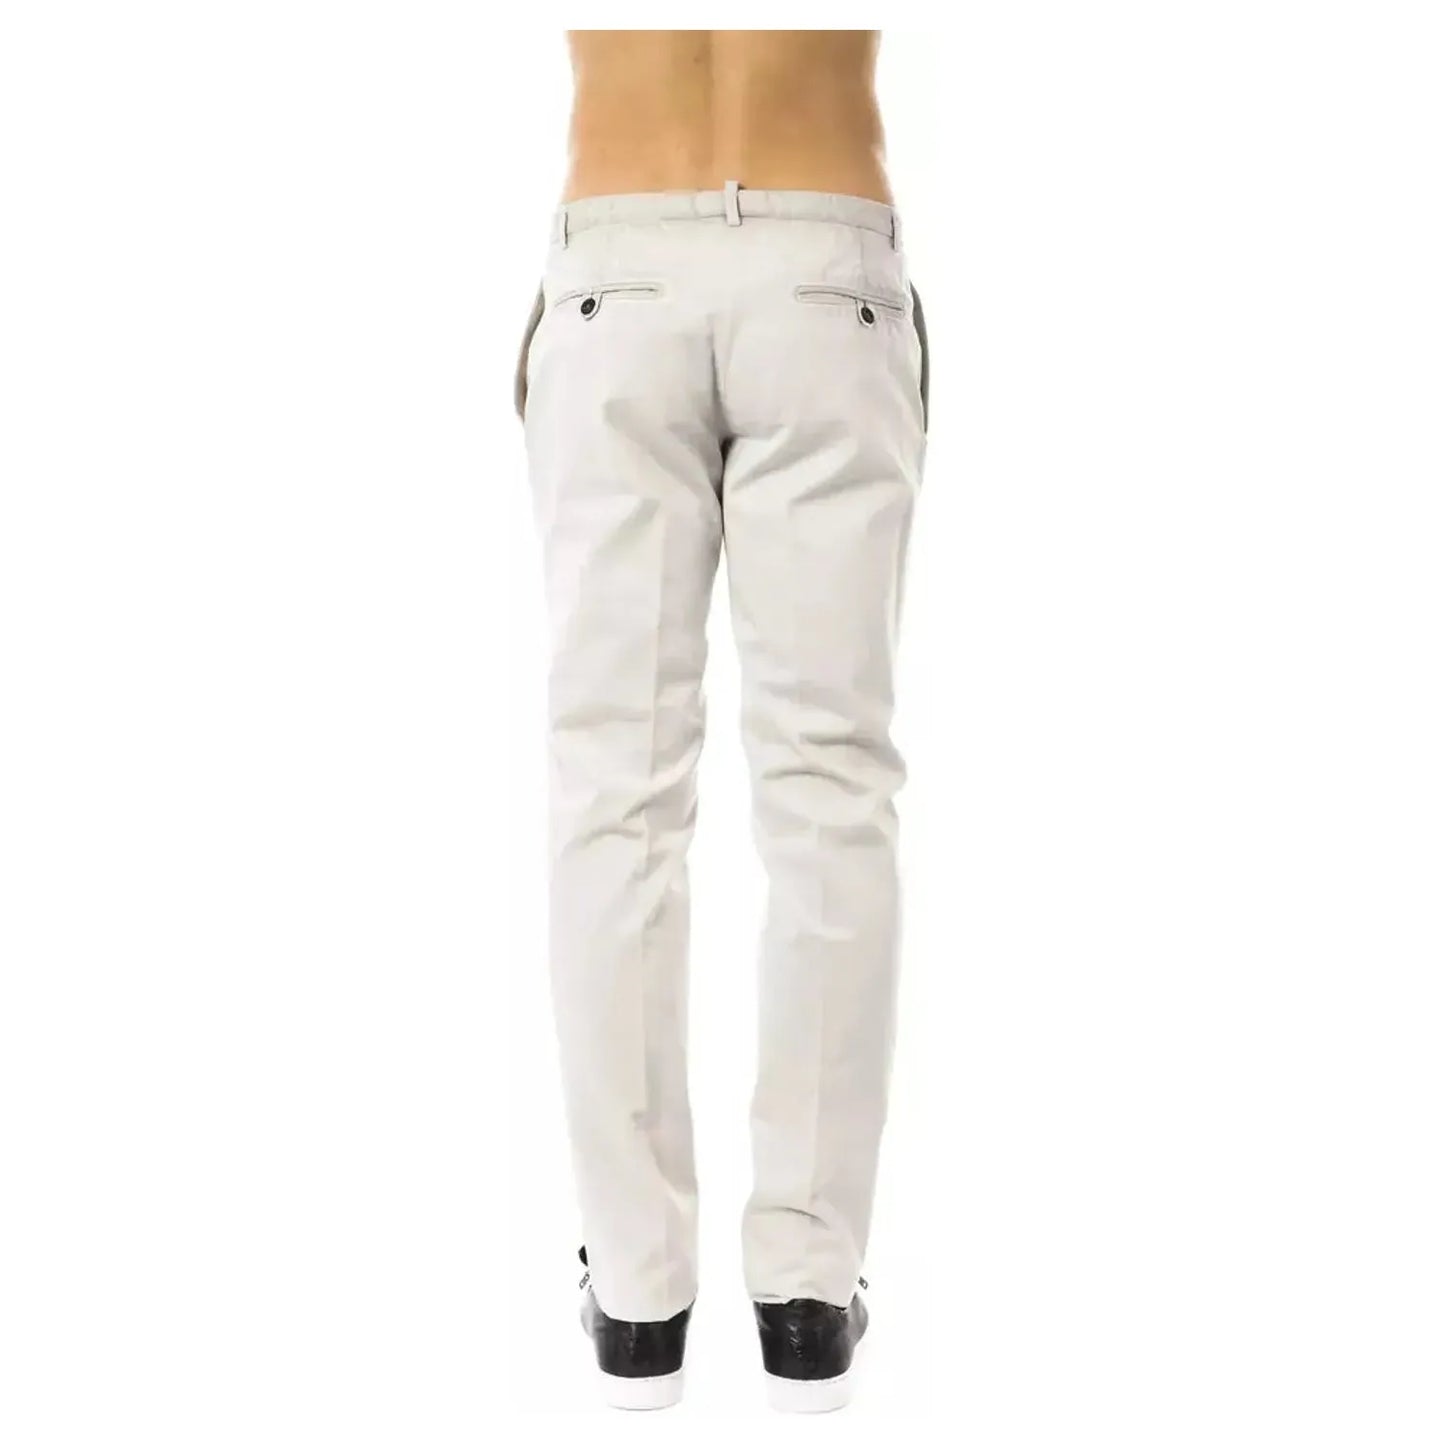 Uominitaliani Elegant Gray Casual Cotton Pants jeans-pant-3 Jeans & Pants stock_product_image_17040_258579841-16-a3219bee-6e8.webp